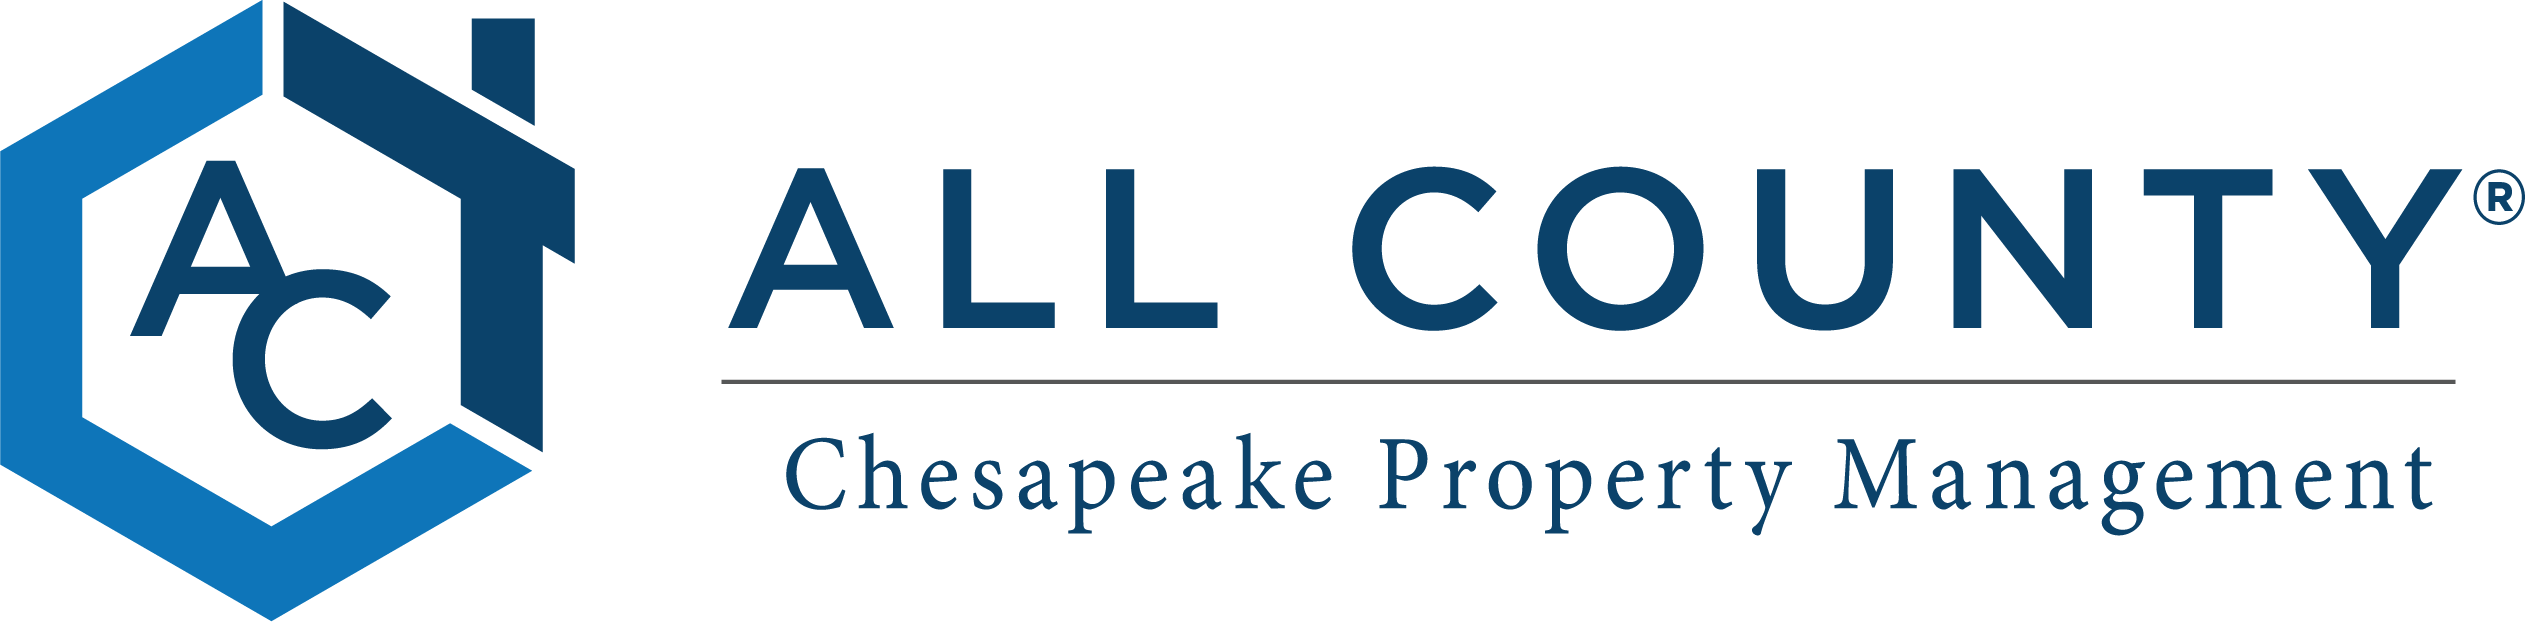 All County Chesapeake Property Management logo